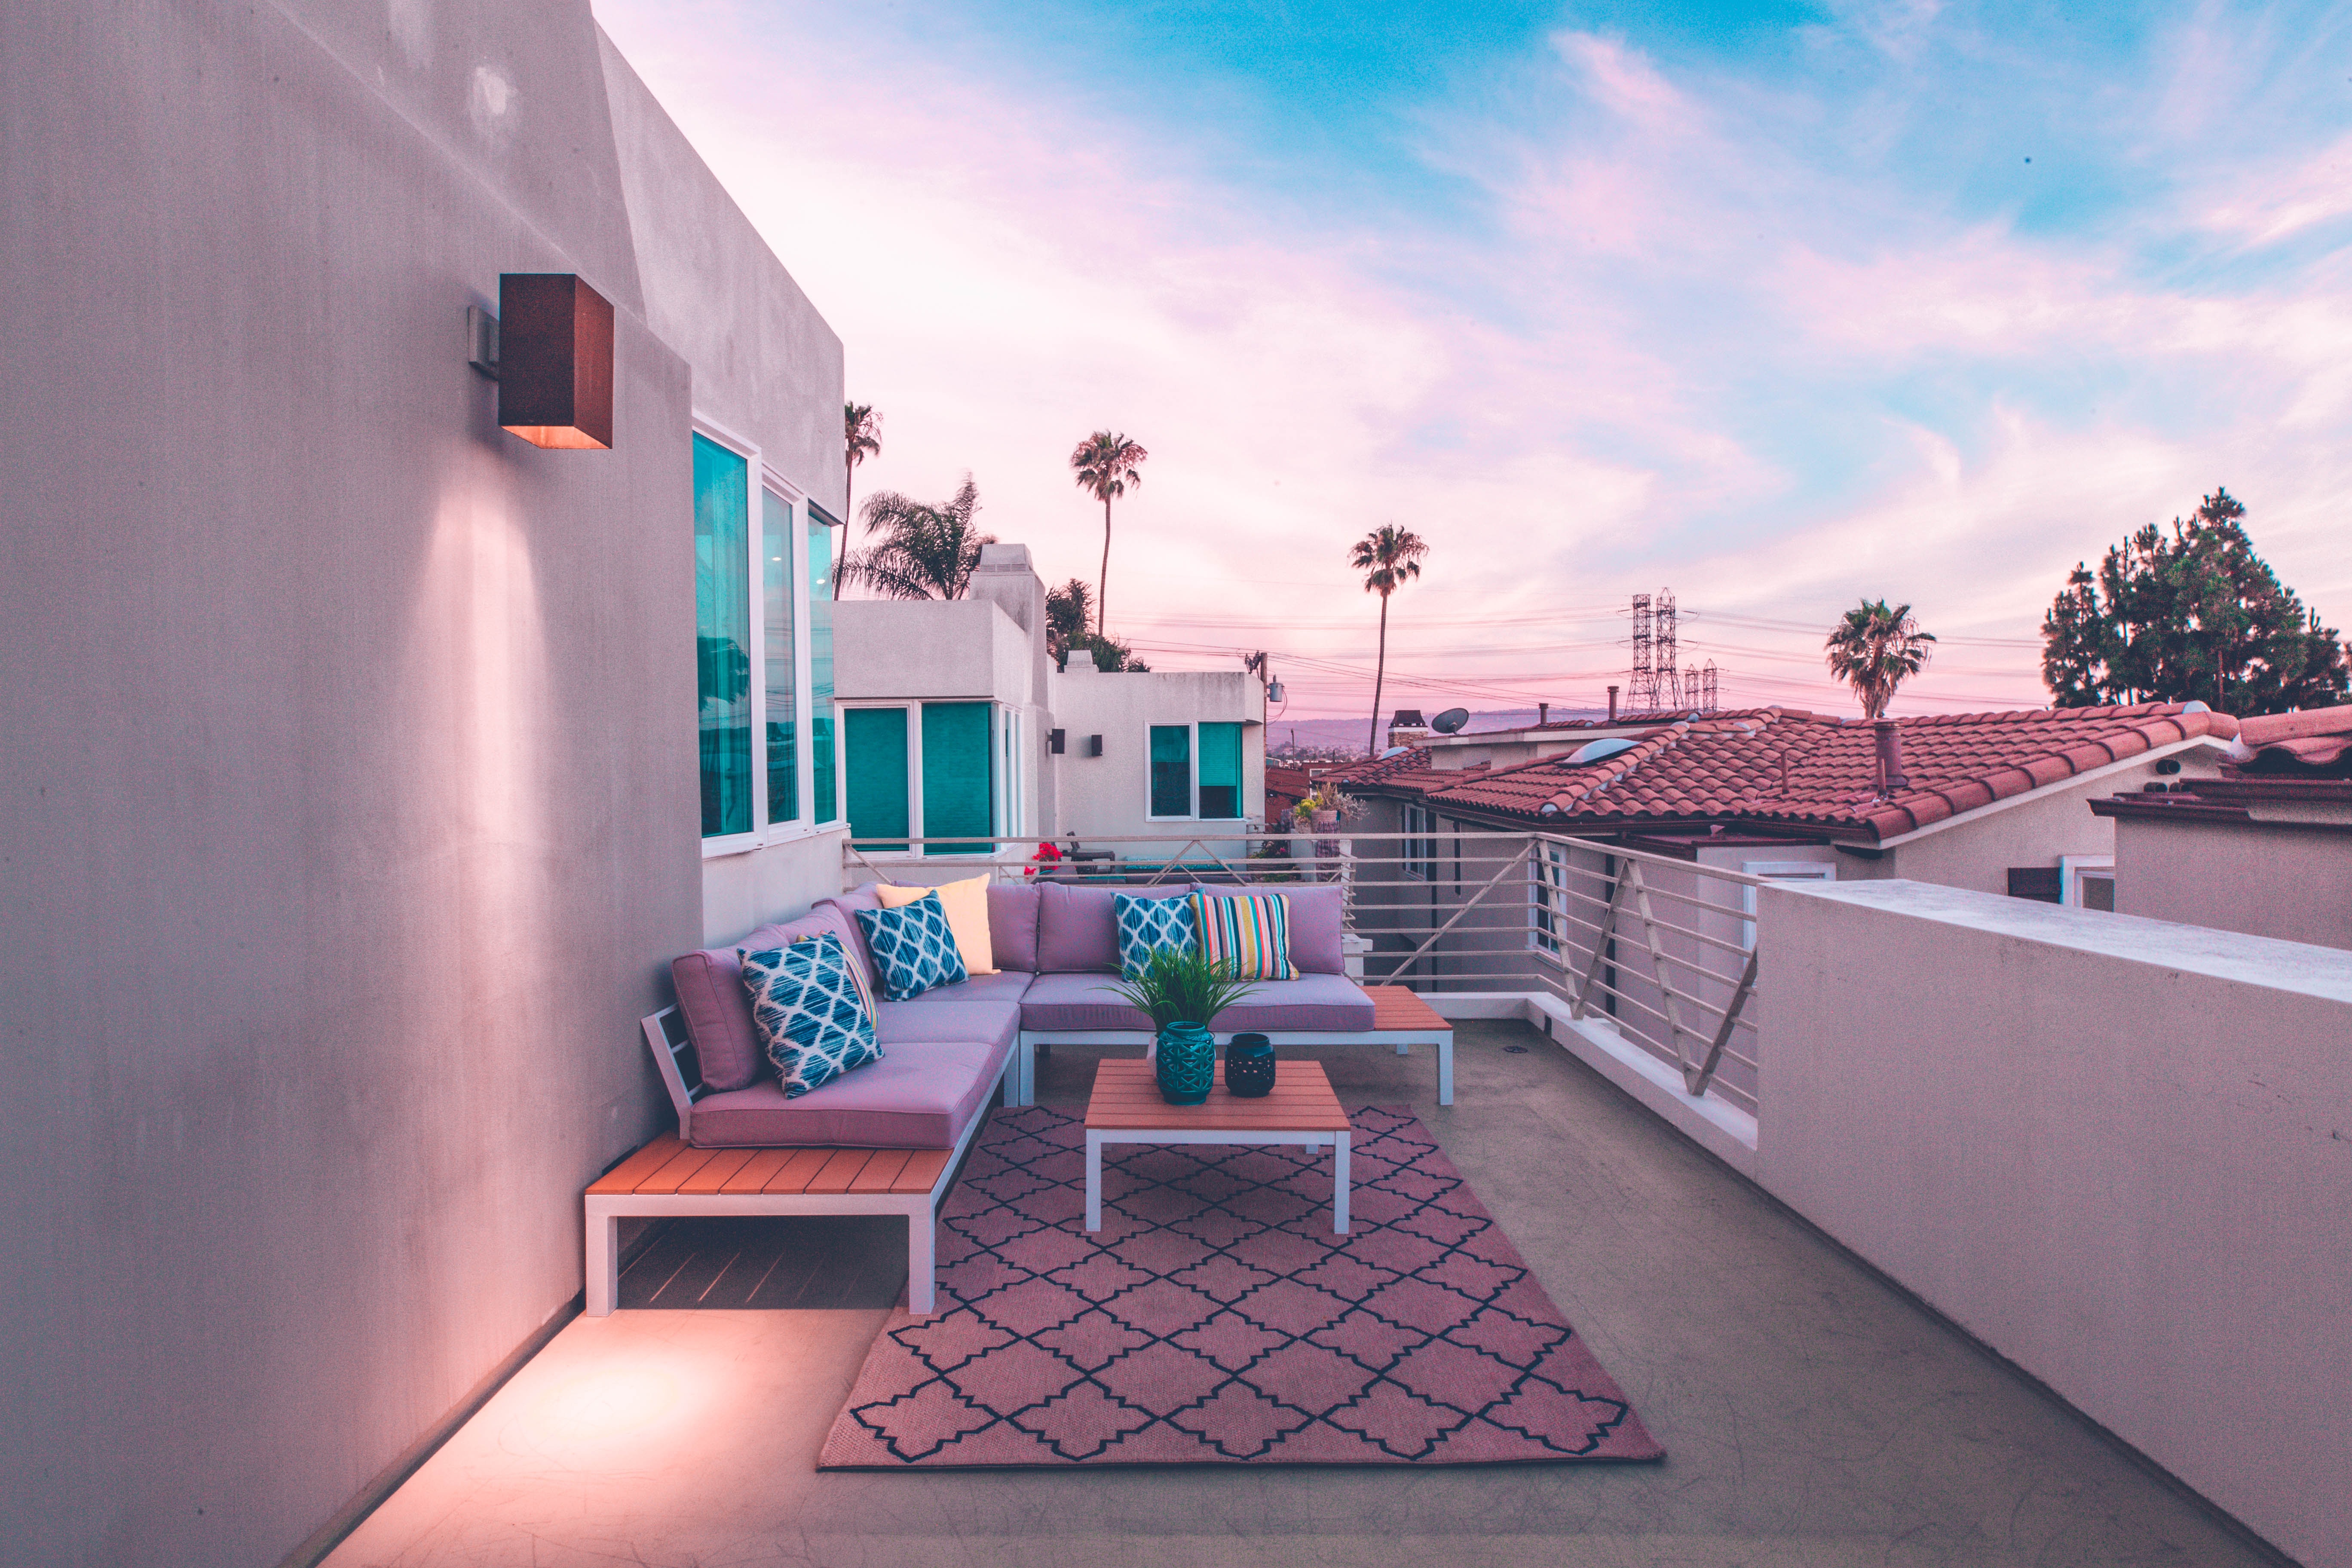 tropics, palms, comfort, balcony, miscellanea, miscellaneous, furniture, coziness, patio 1080p